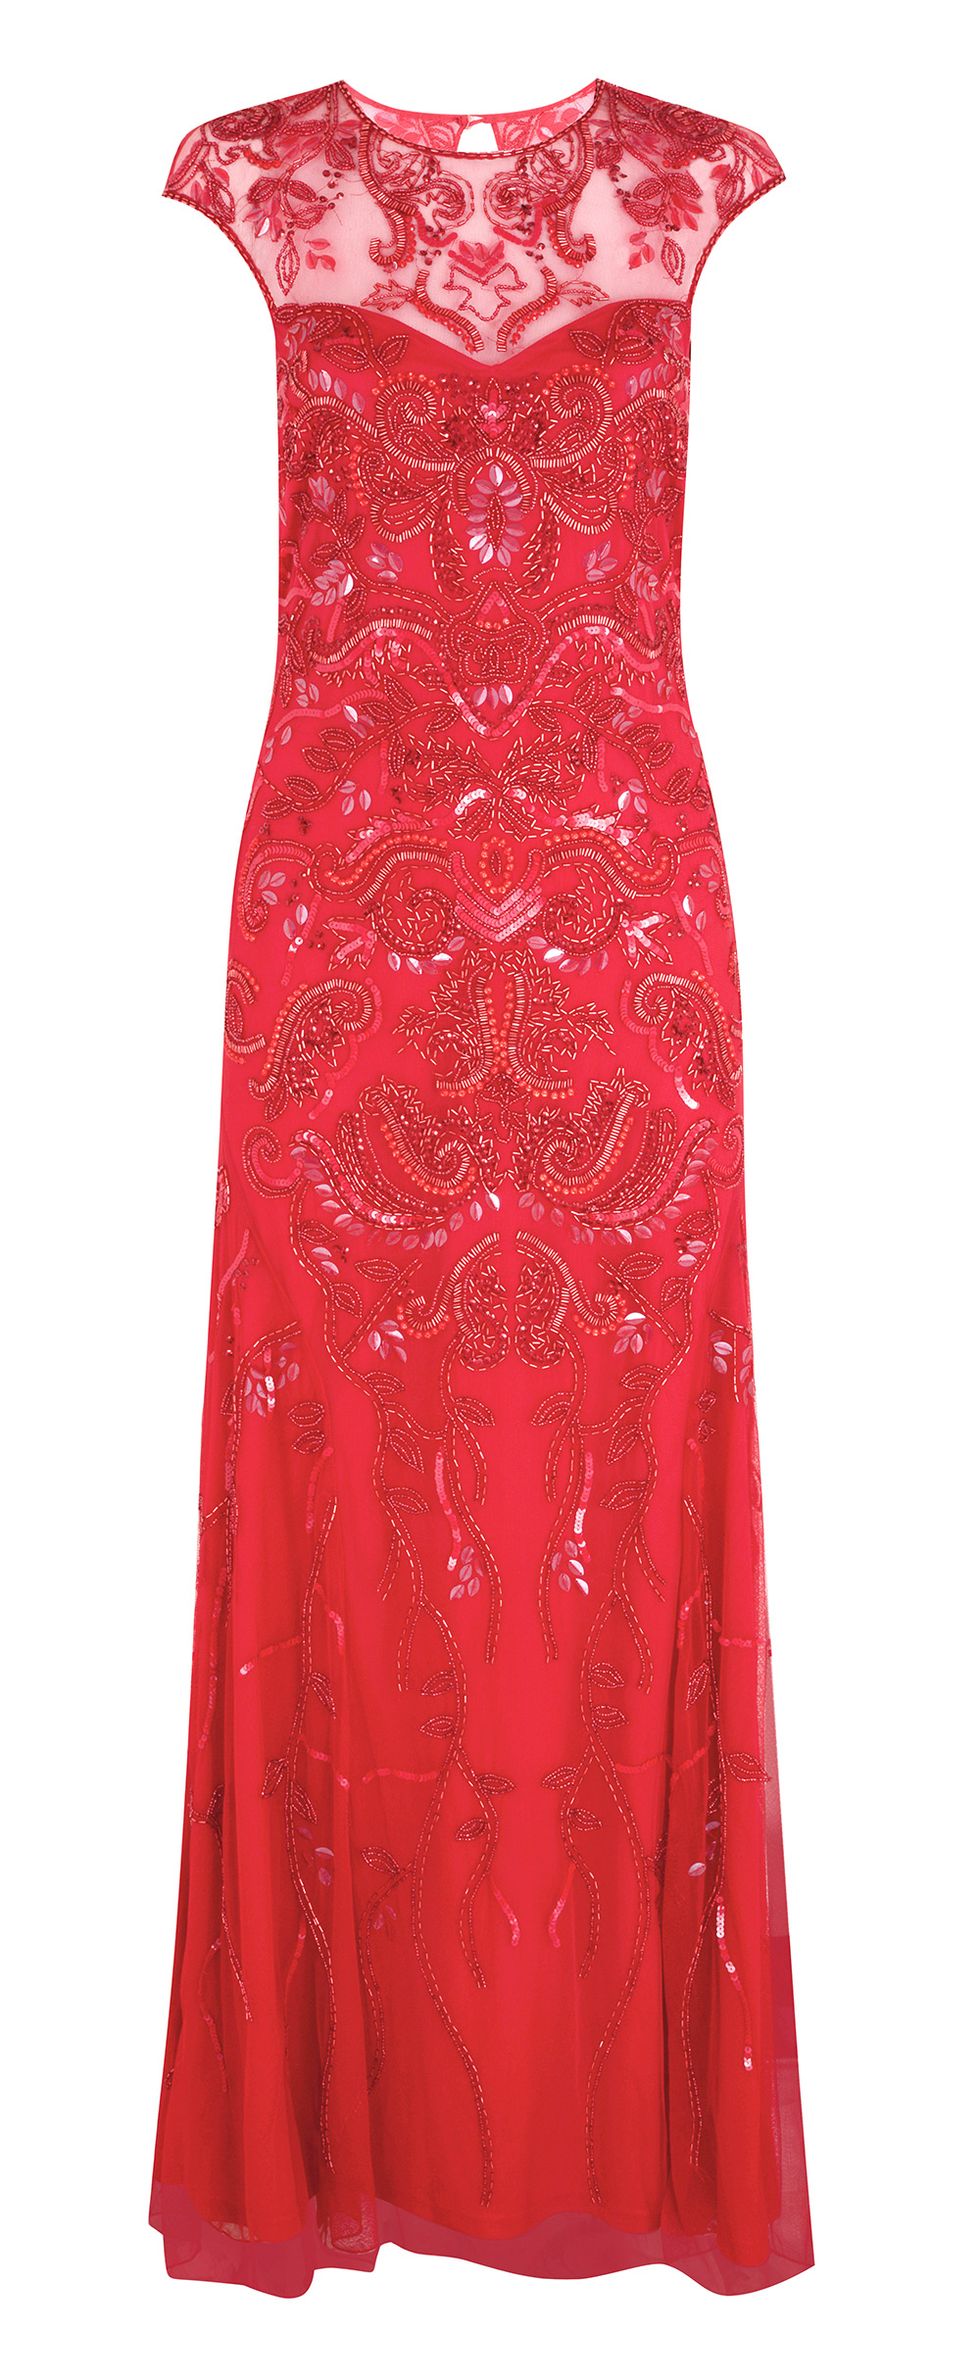 Lily maxi dress - Miss Selfridge Premium Collection